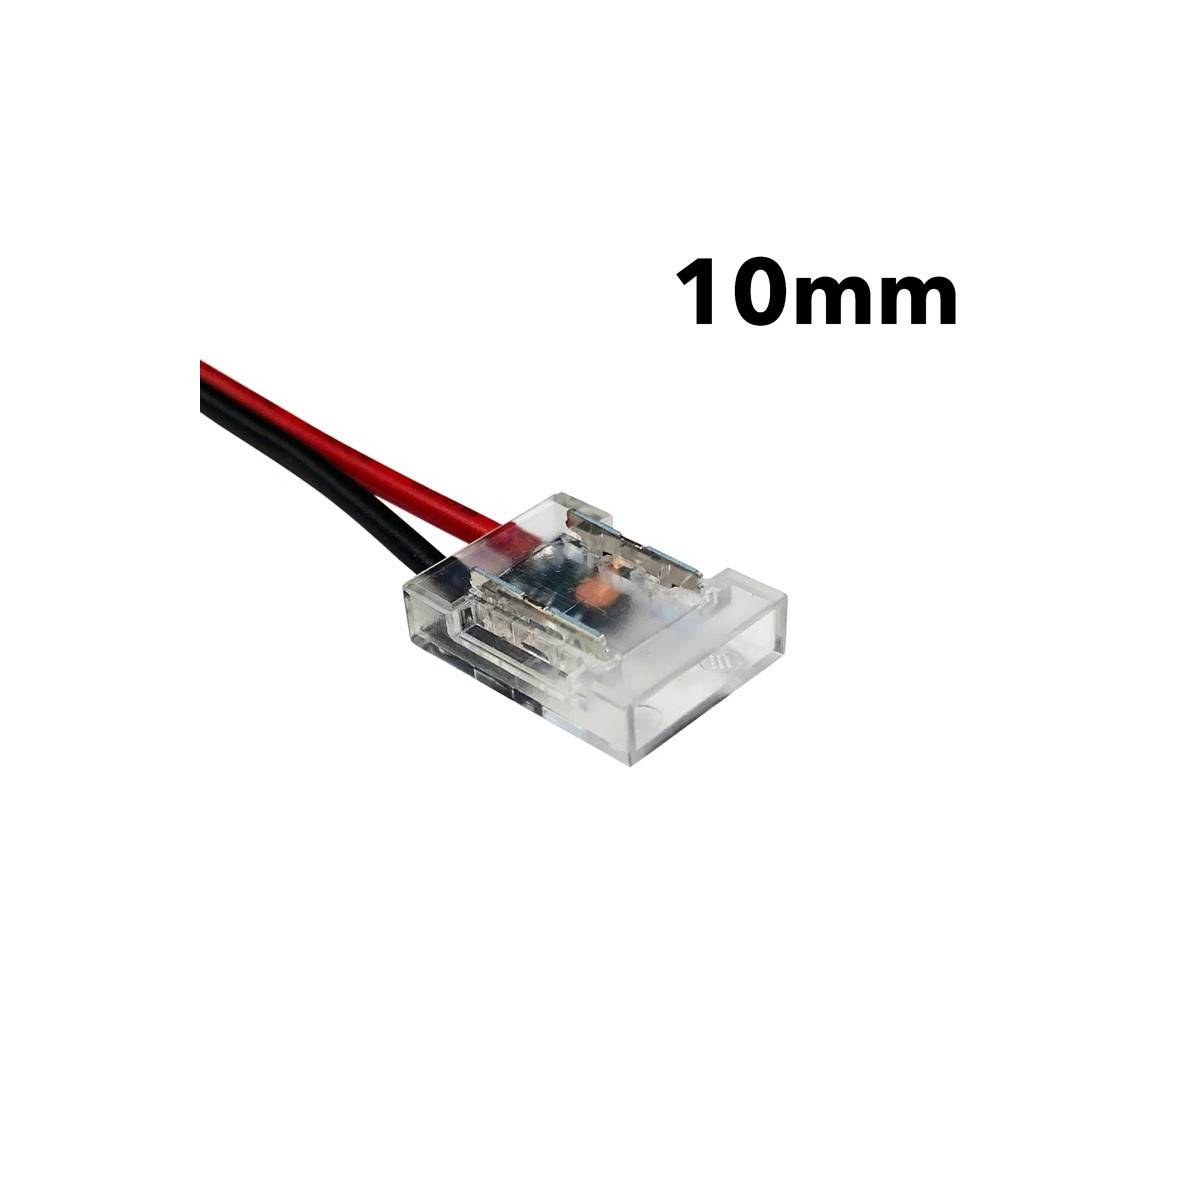 Connector for 10mm single-color COB LED strip starter connector